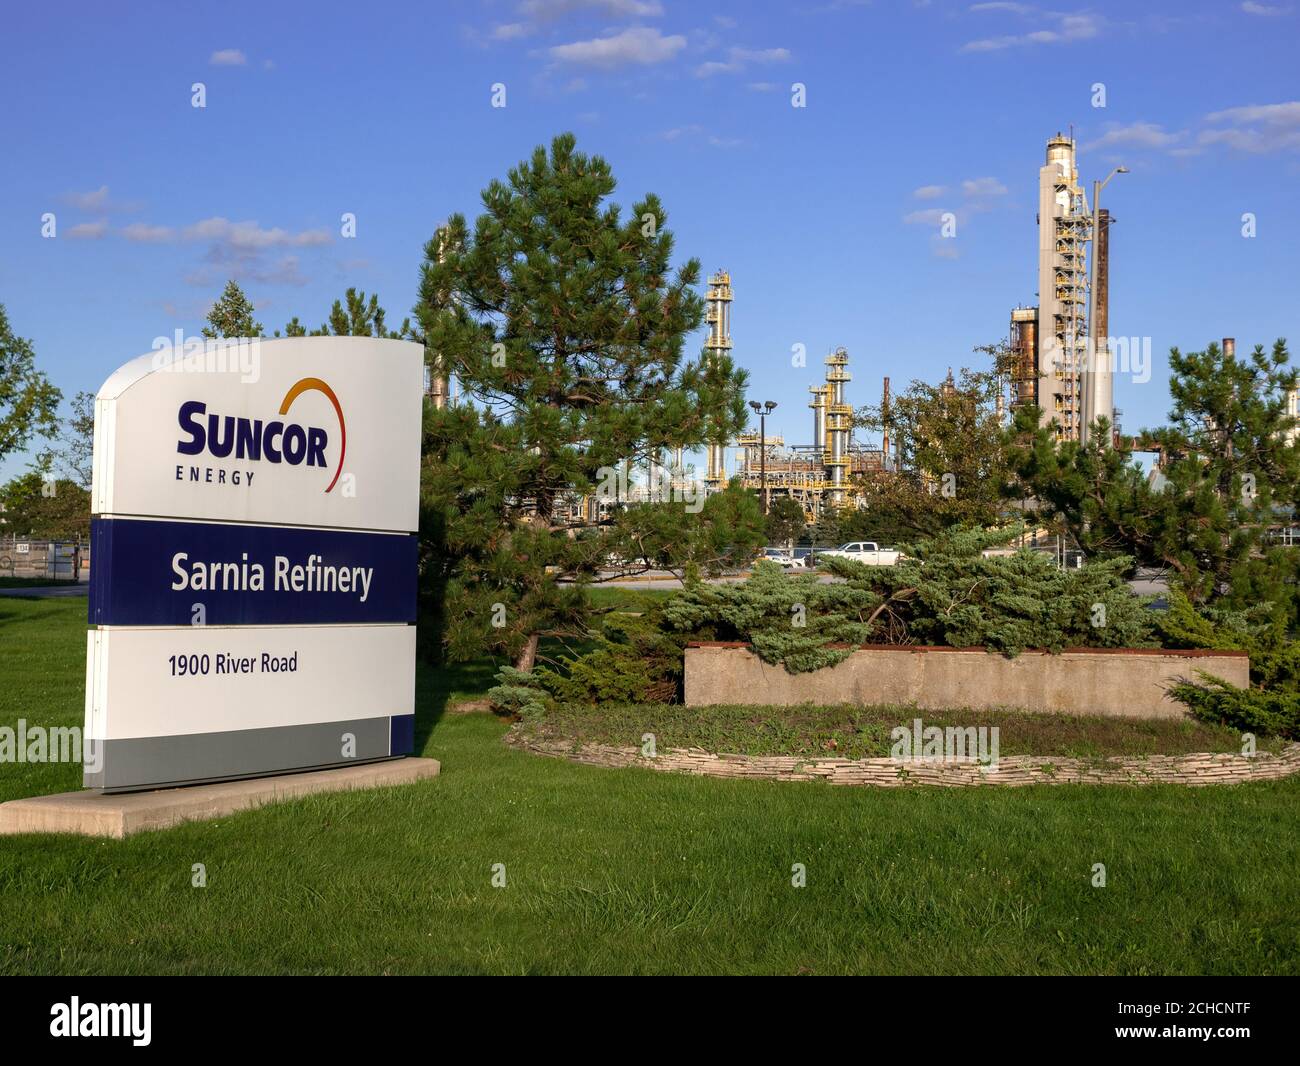 Suncor Energy Oil Refinery On River Road Sarnia Ontario Canada Stock Photo